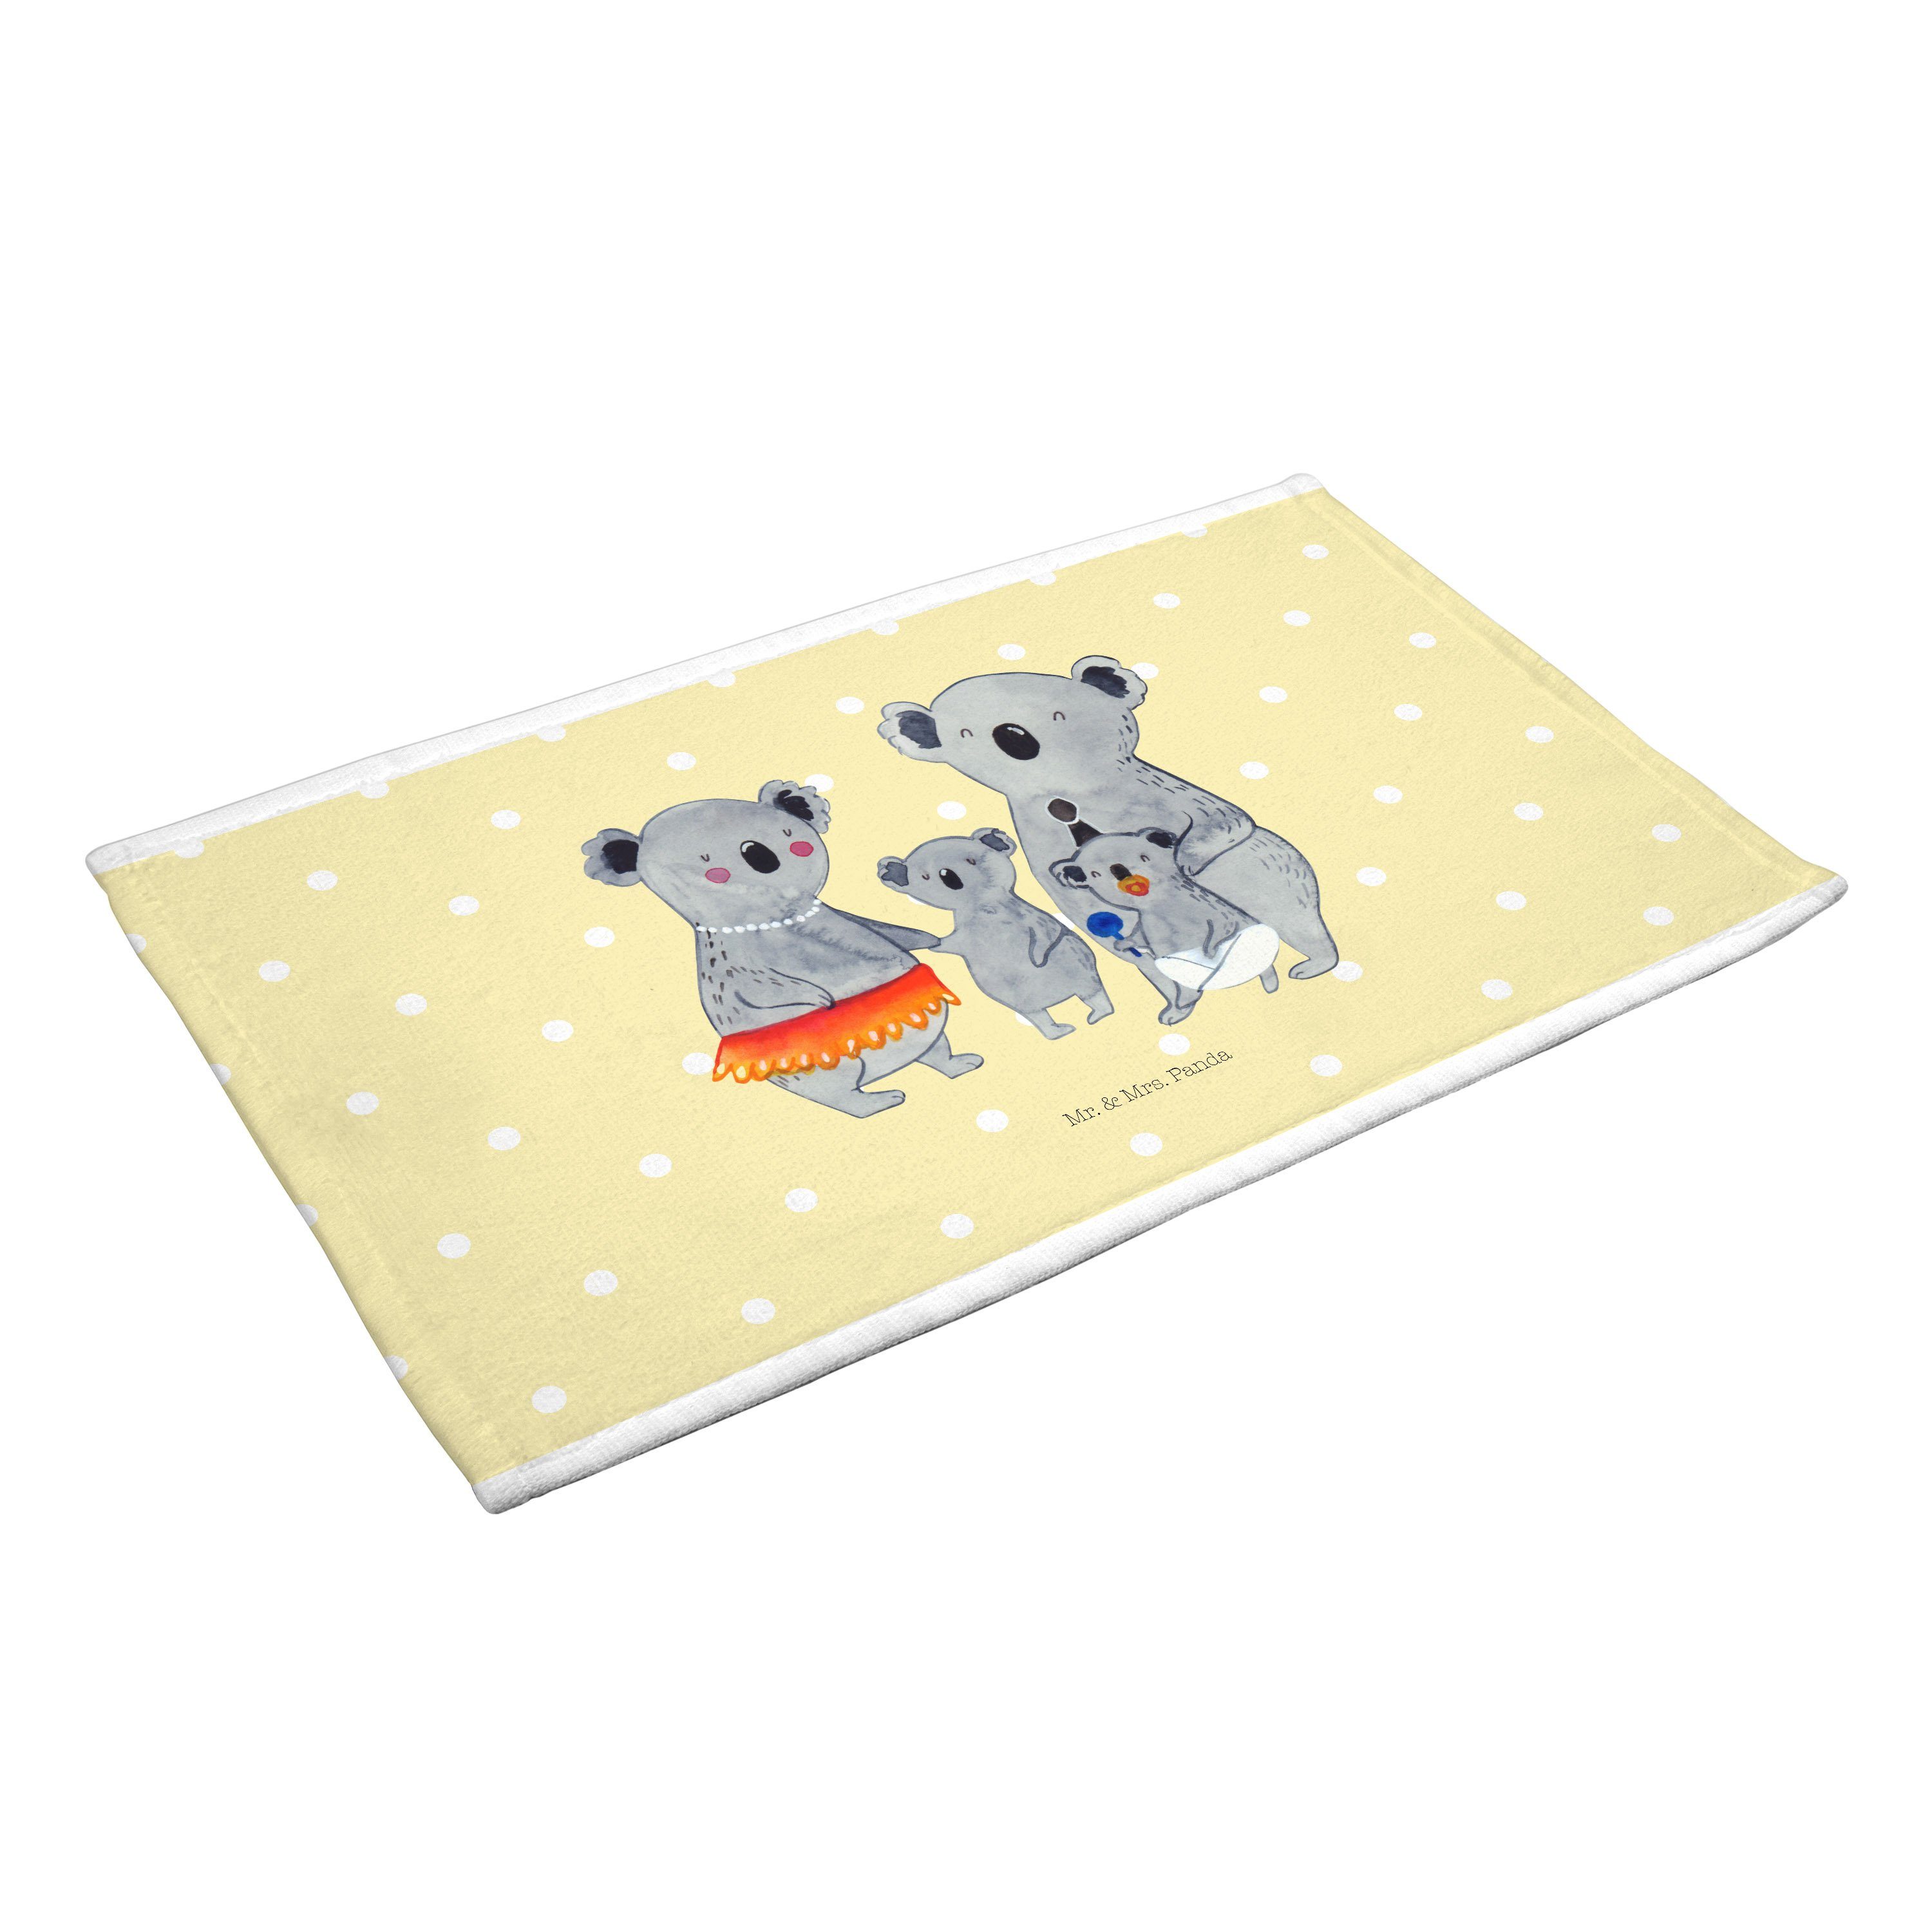 Mr. & Mrs. (1-St) - Handtuch qualit, Pastell Gelb Koala Familie Panda Opa, - Geschenk, Handtuch, Kinder